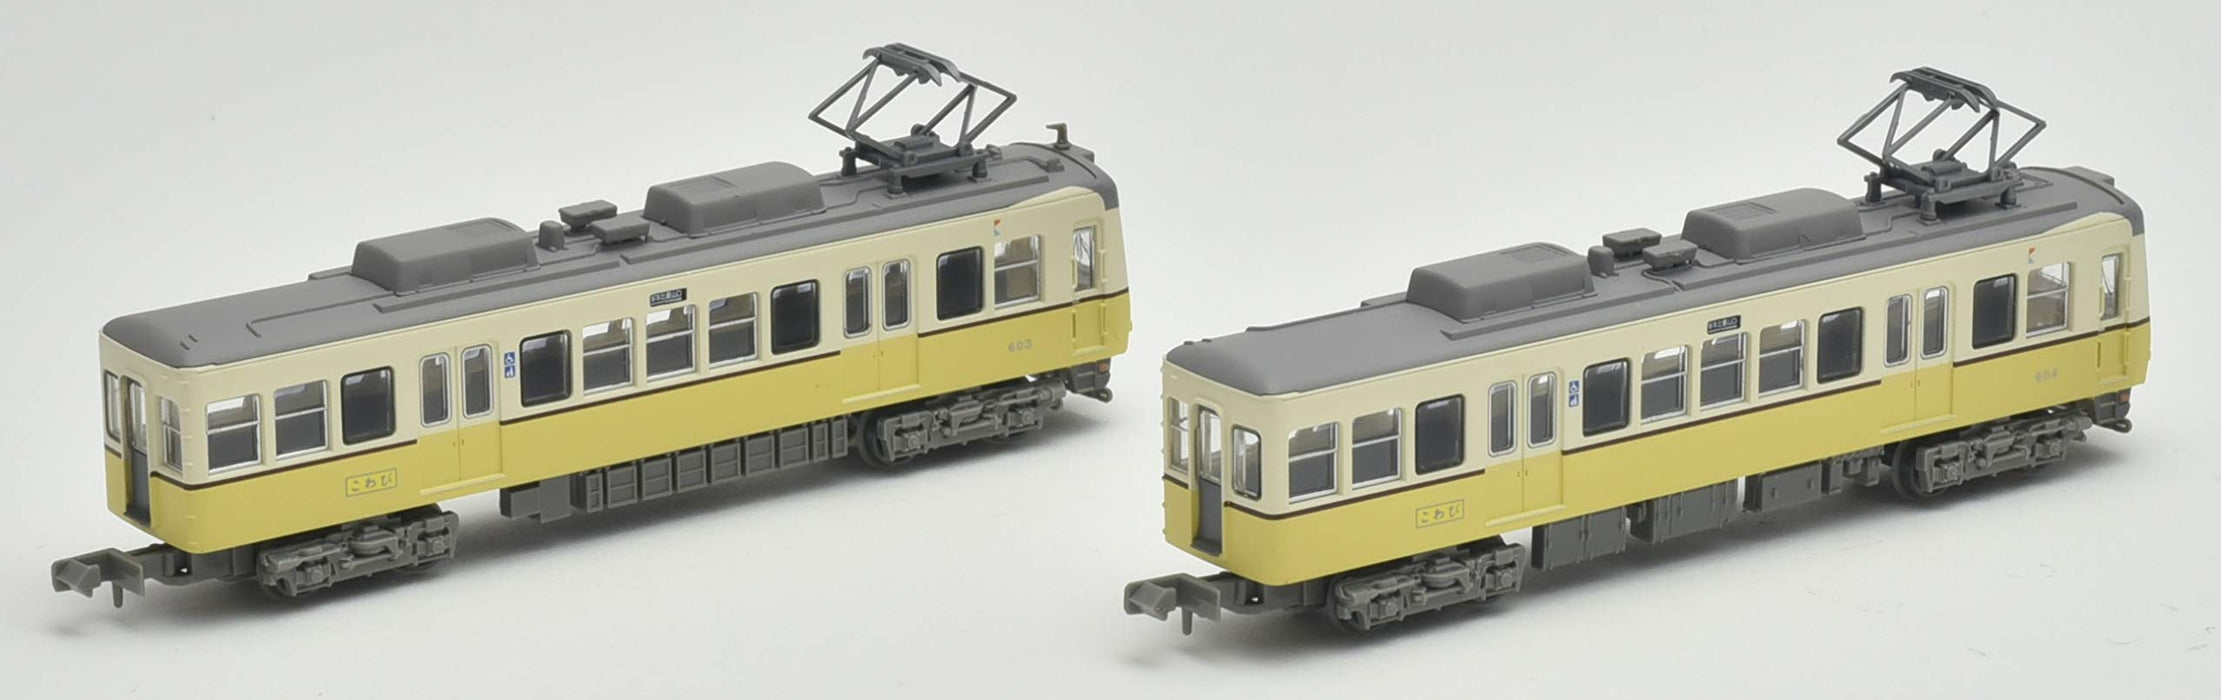 Tomytec Railway Collection Keihan Otsu Line Type 600 2-Car Set Diorama Supplies First Edition